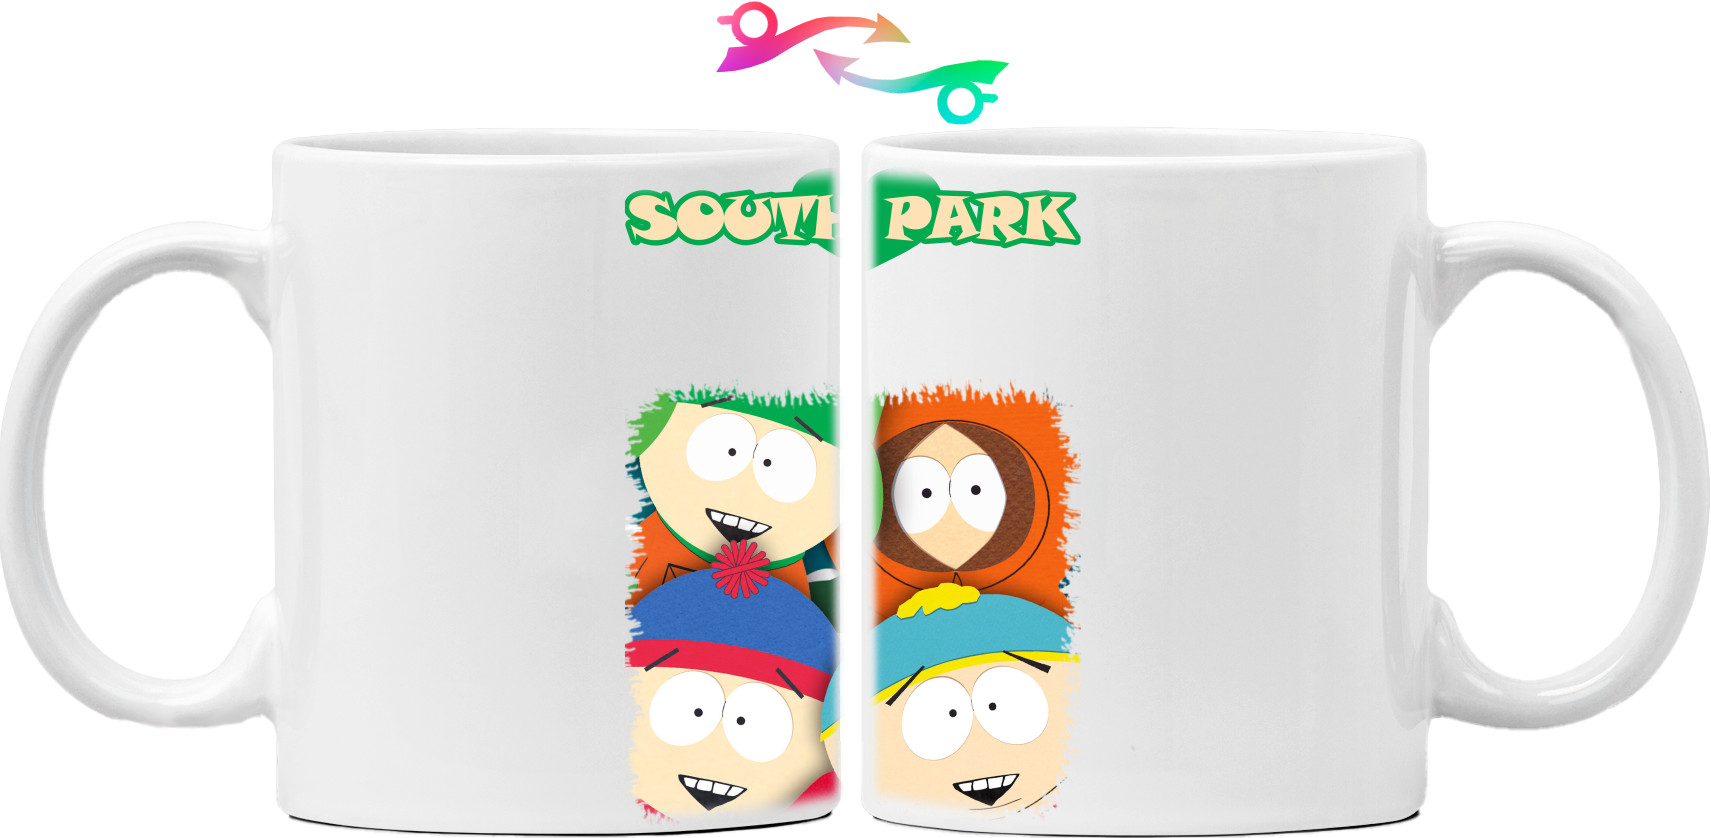 South Park 6